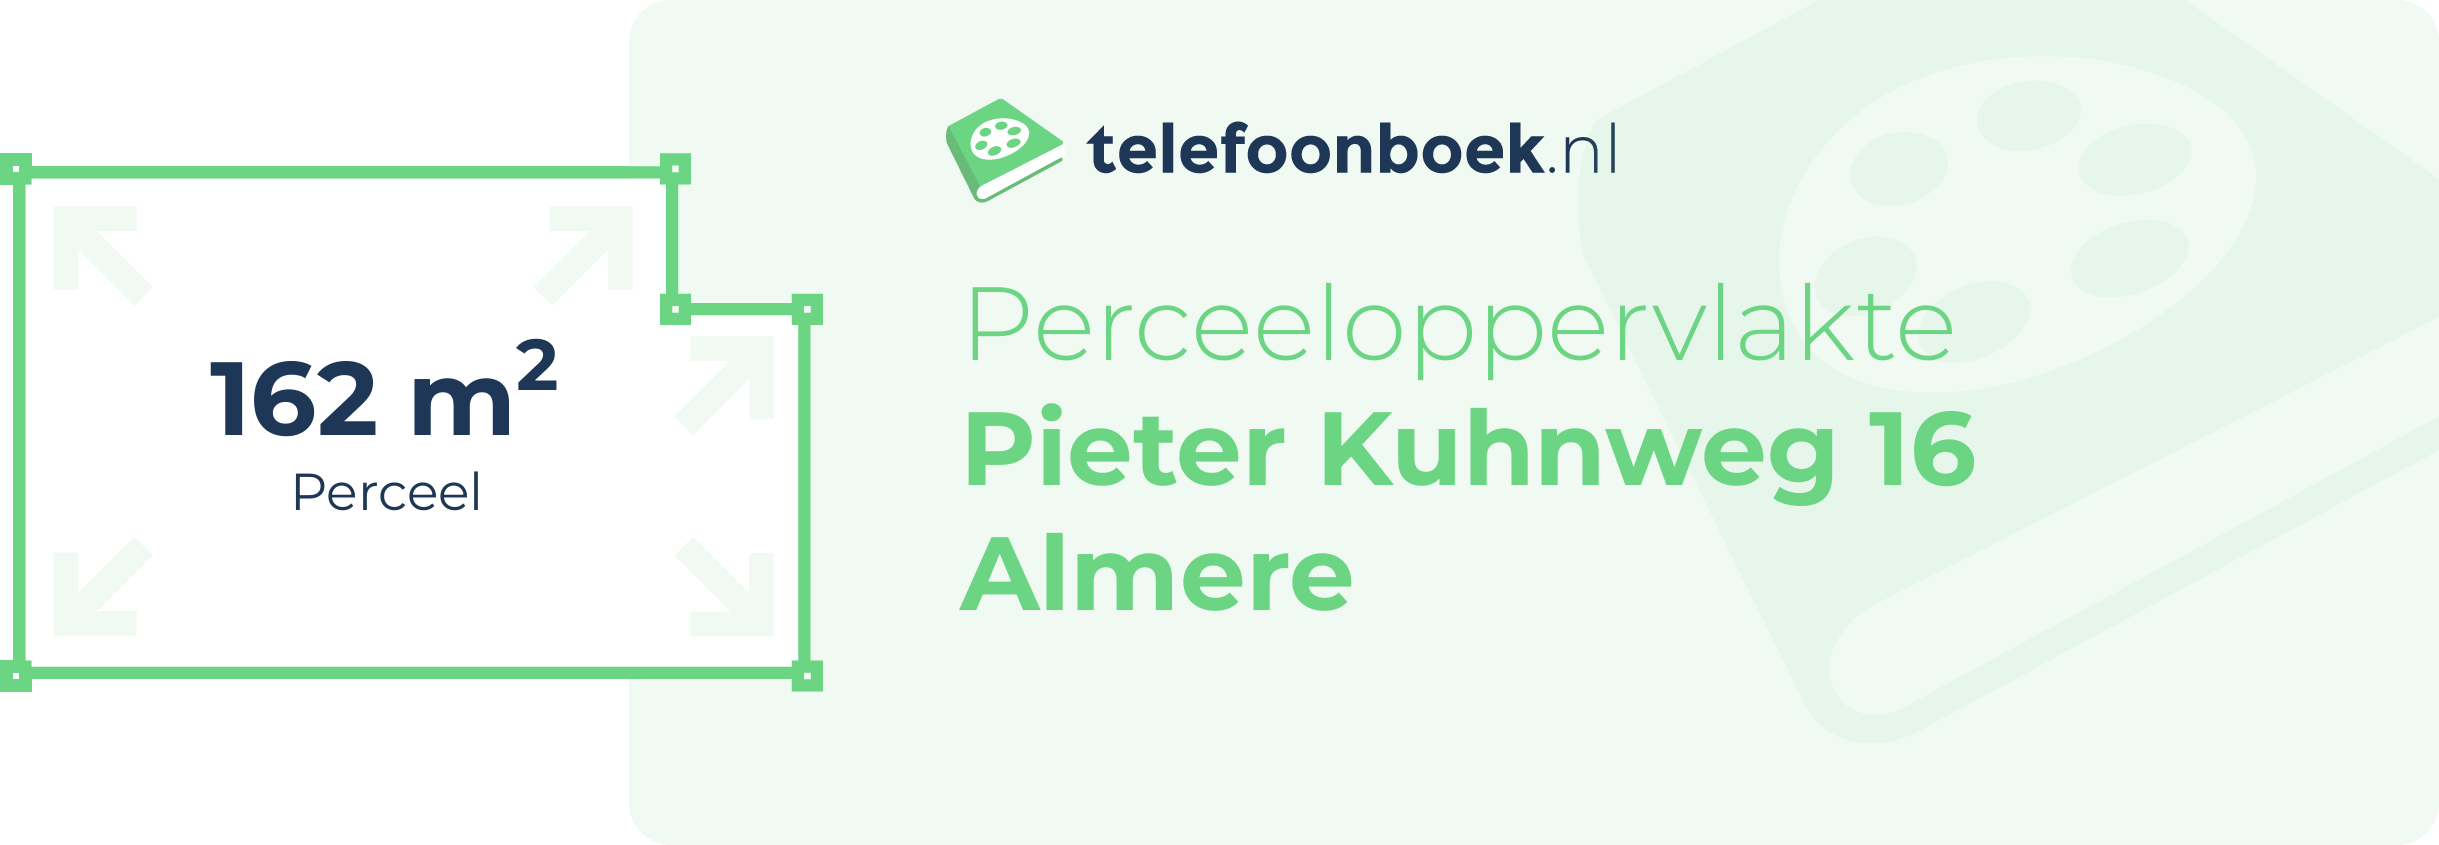 Perceeloppervlakte Pieter Kuhnweg 16 Almere